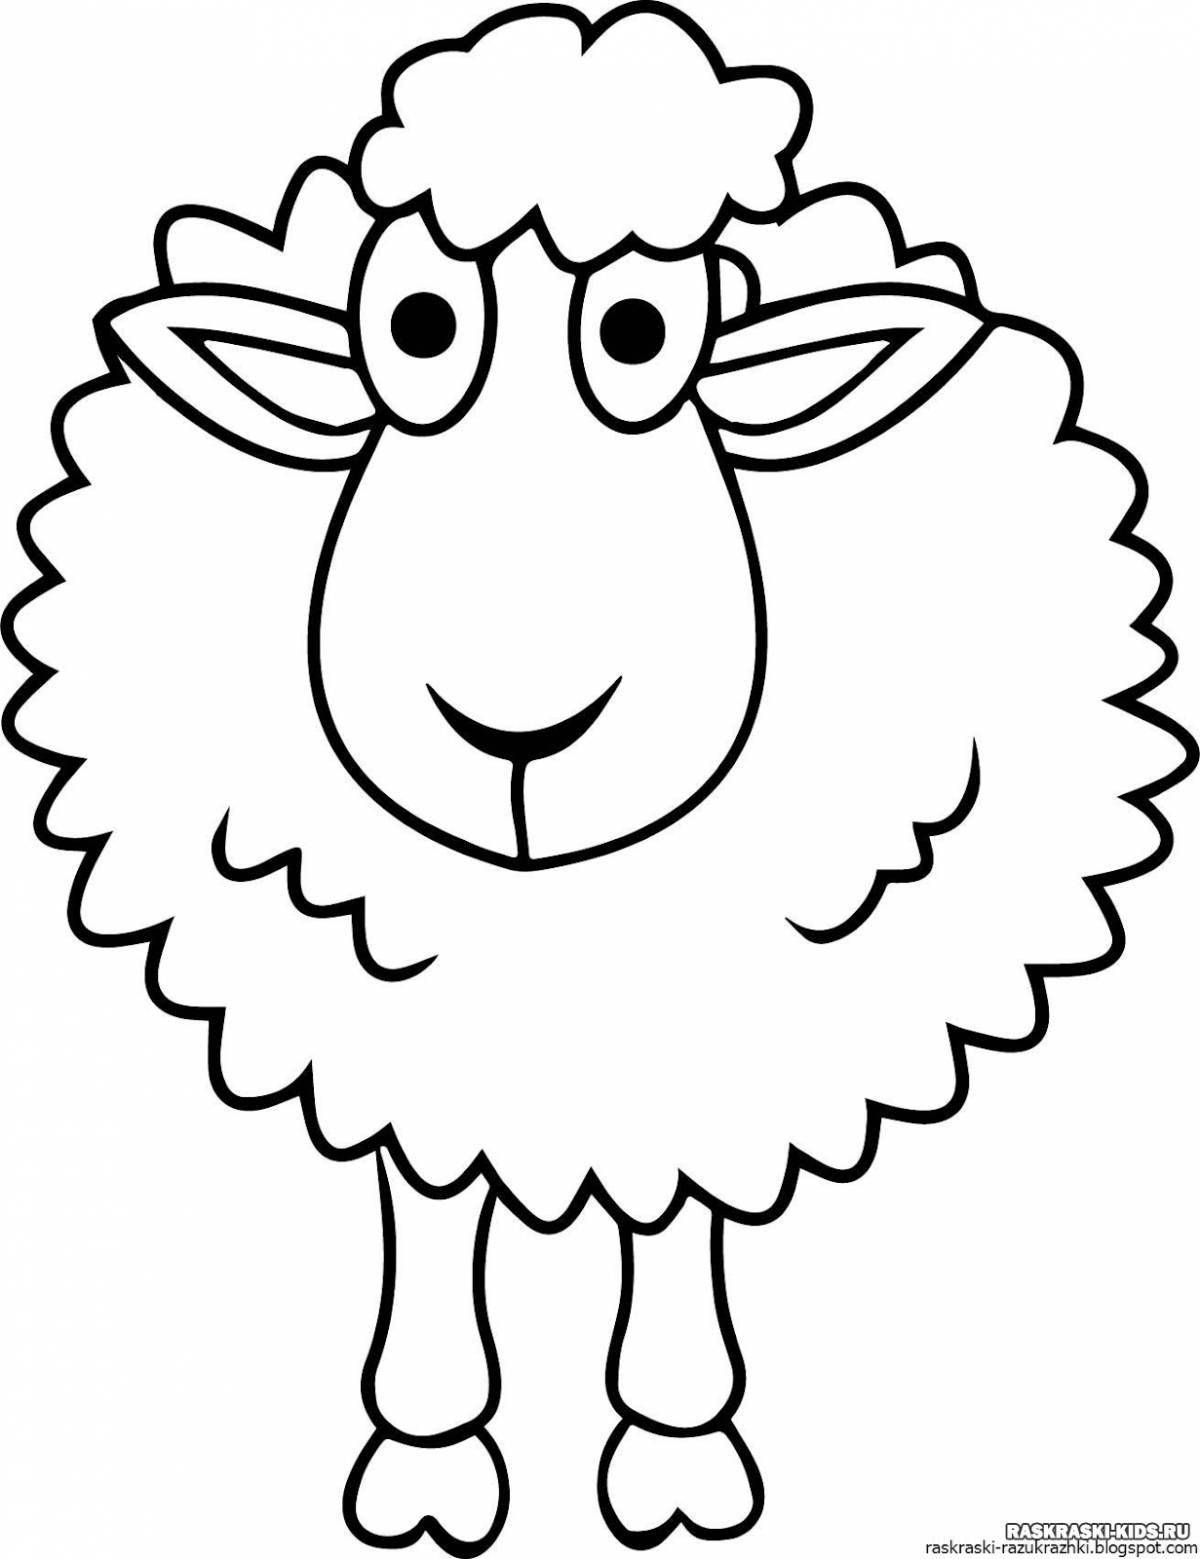 Fuzzy coloring lamb